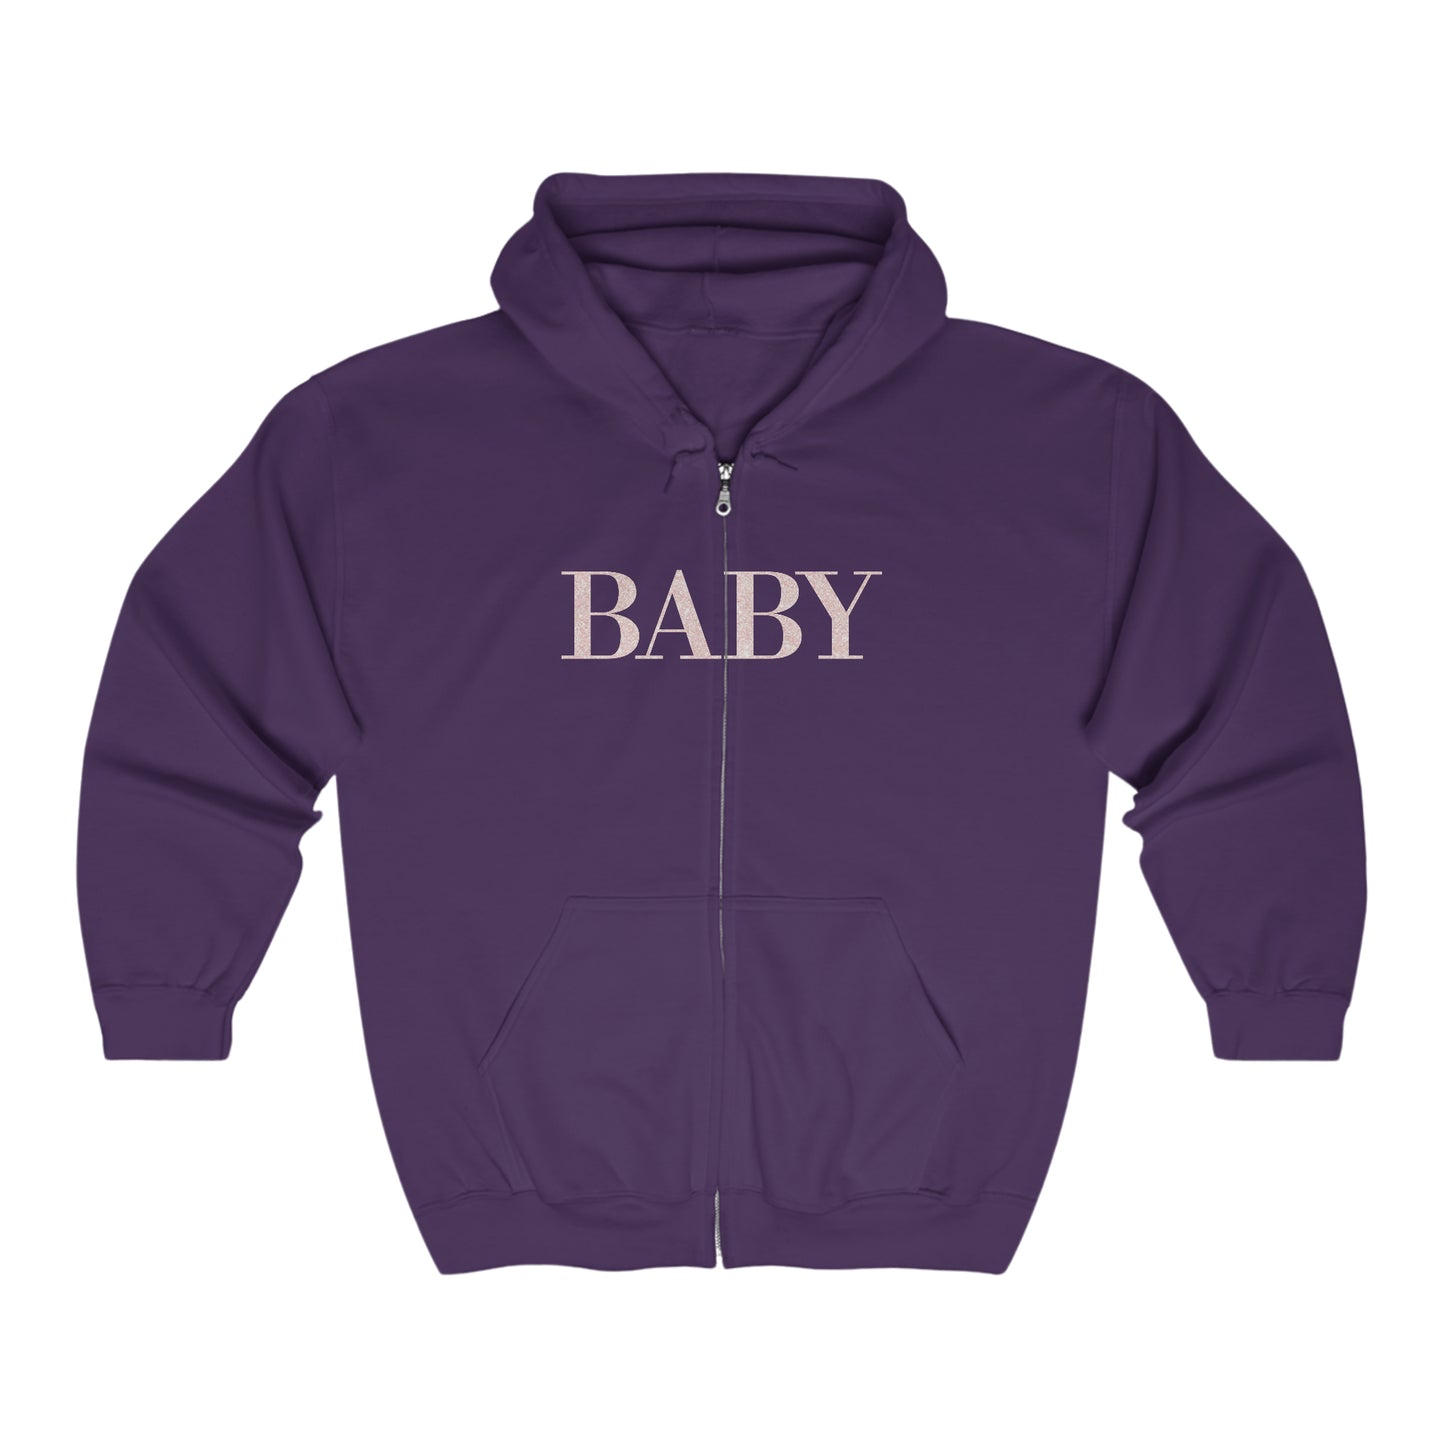 BABY Full Zip Hooded Sweatshirt